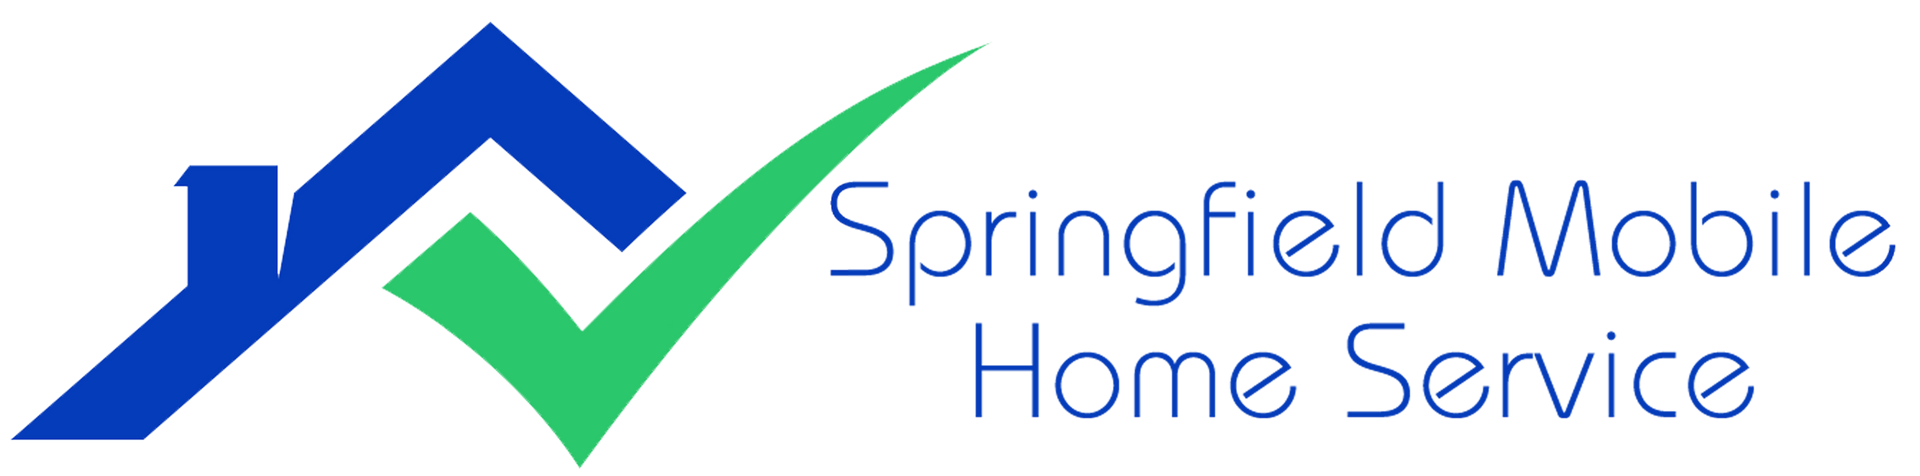 Springfield Mobile Home Service - Logo